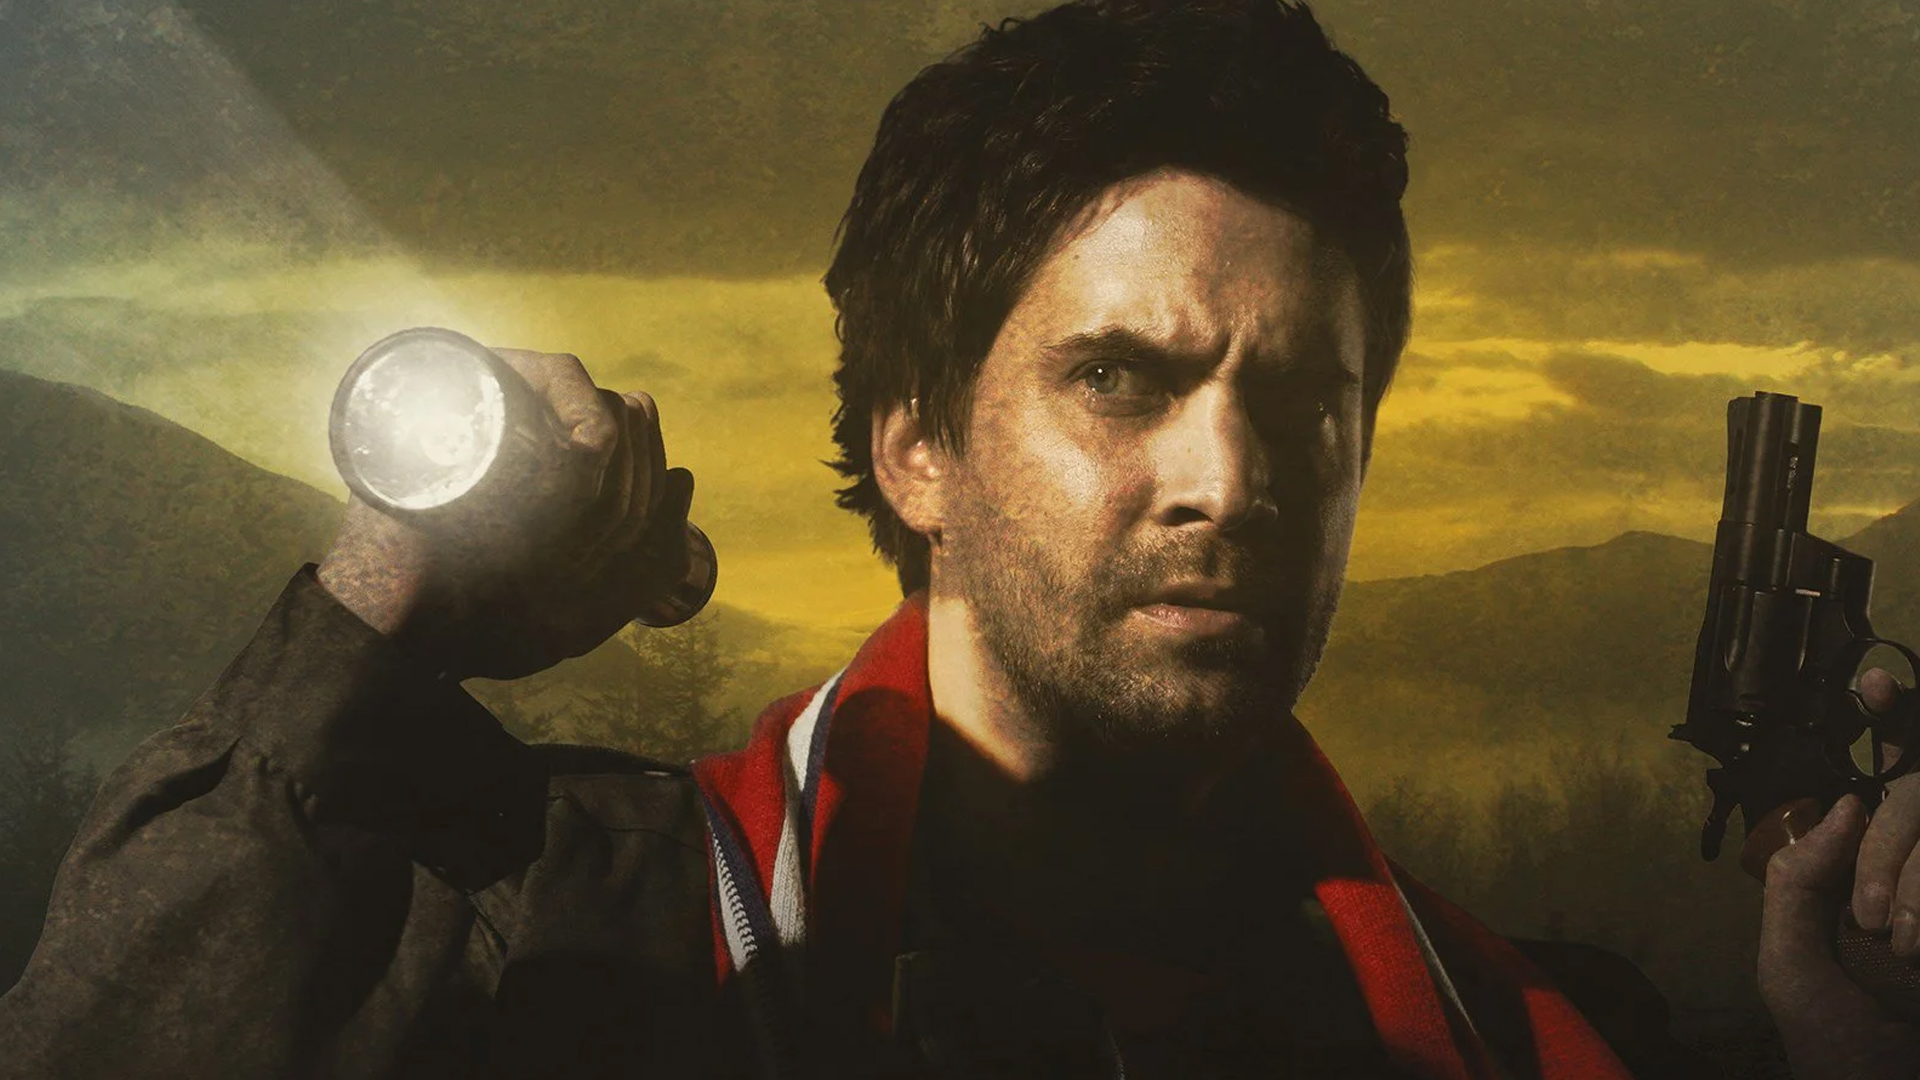 Alan Wake 2: Sam Lake Confirms a Character Who Isn't Returning